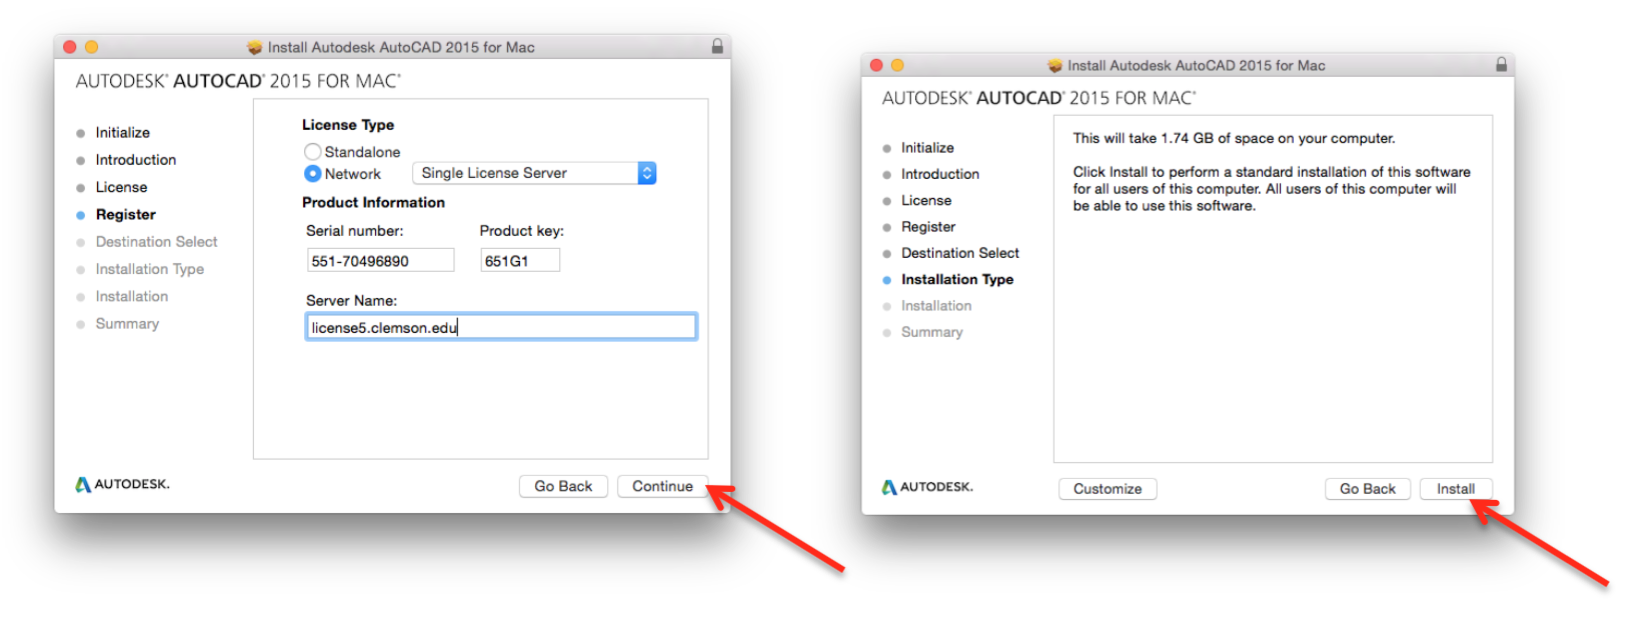 Autodesk Autocad 2016 For Mac